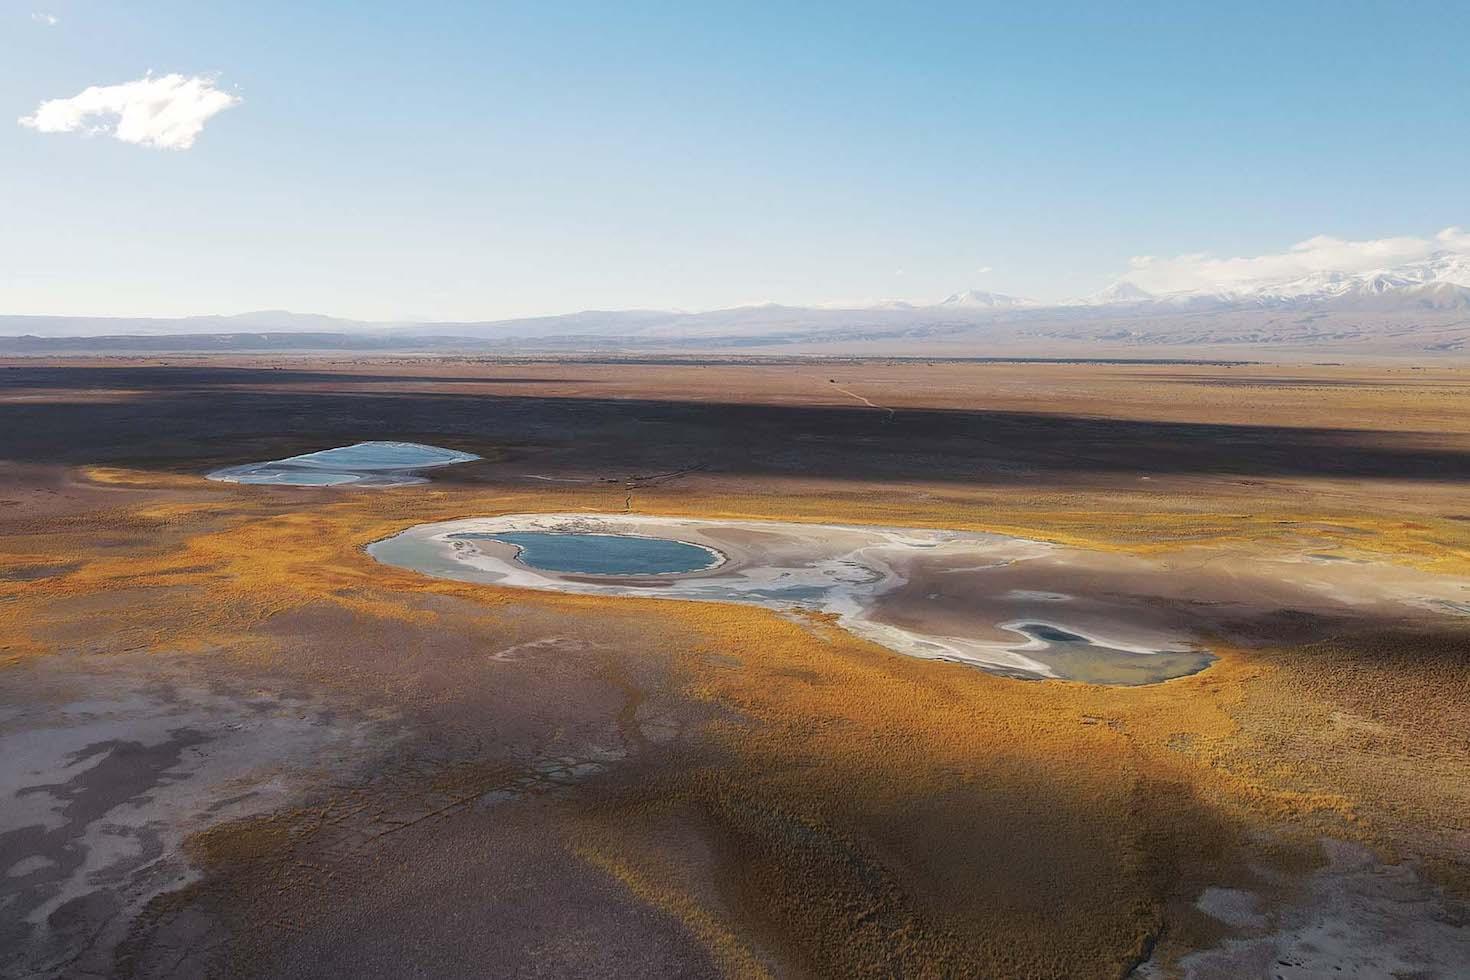 Image of a large lake on a desert landscape